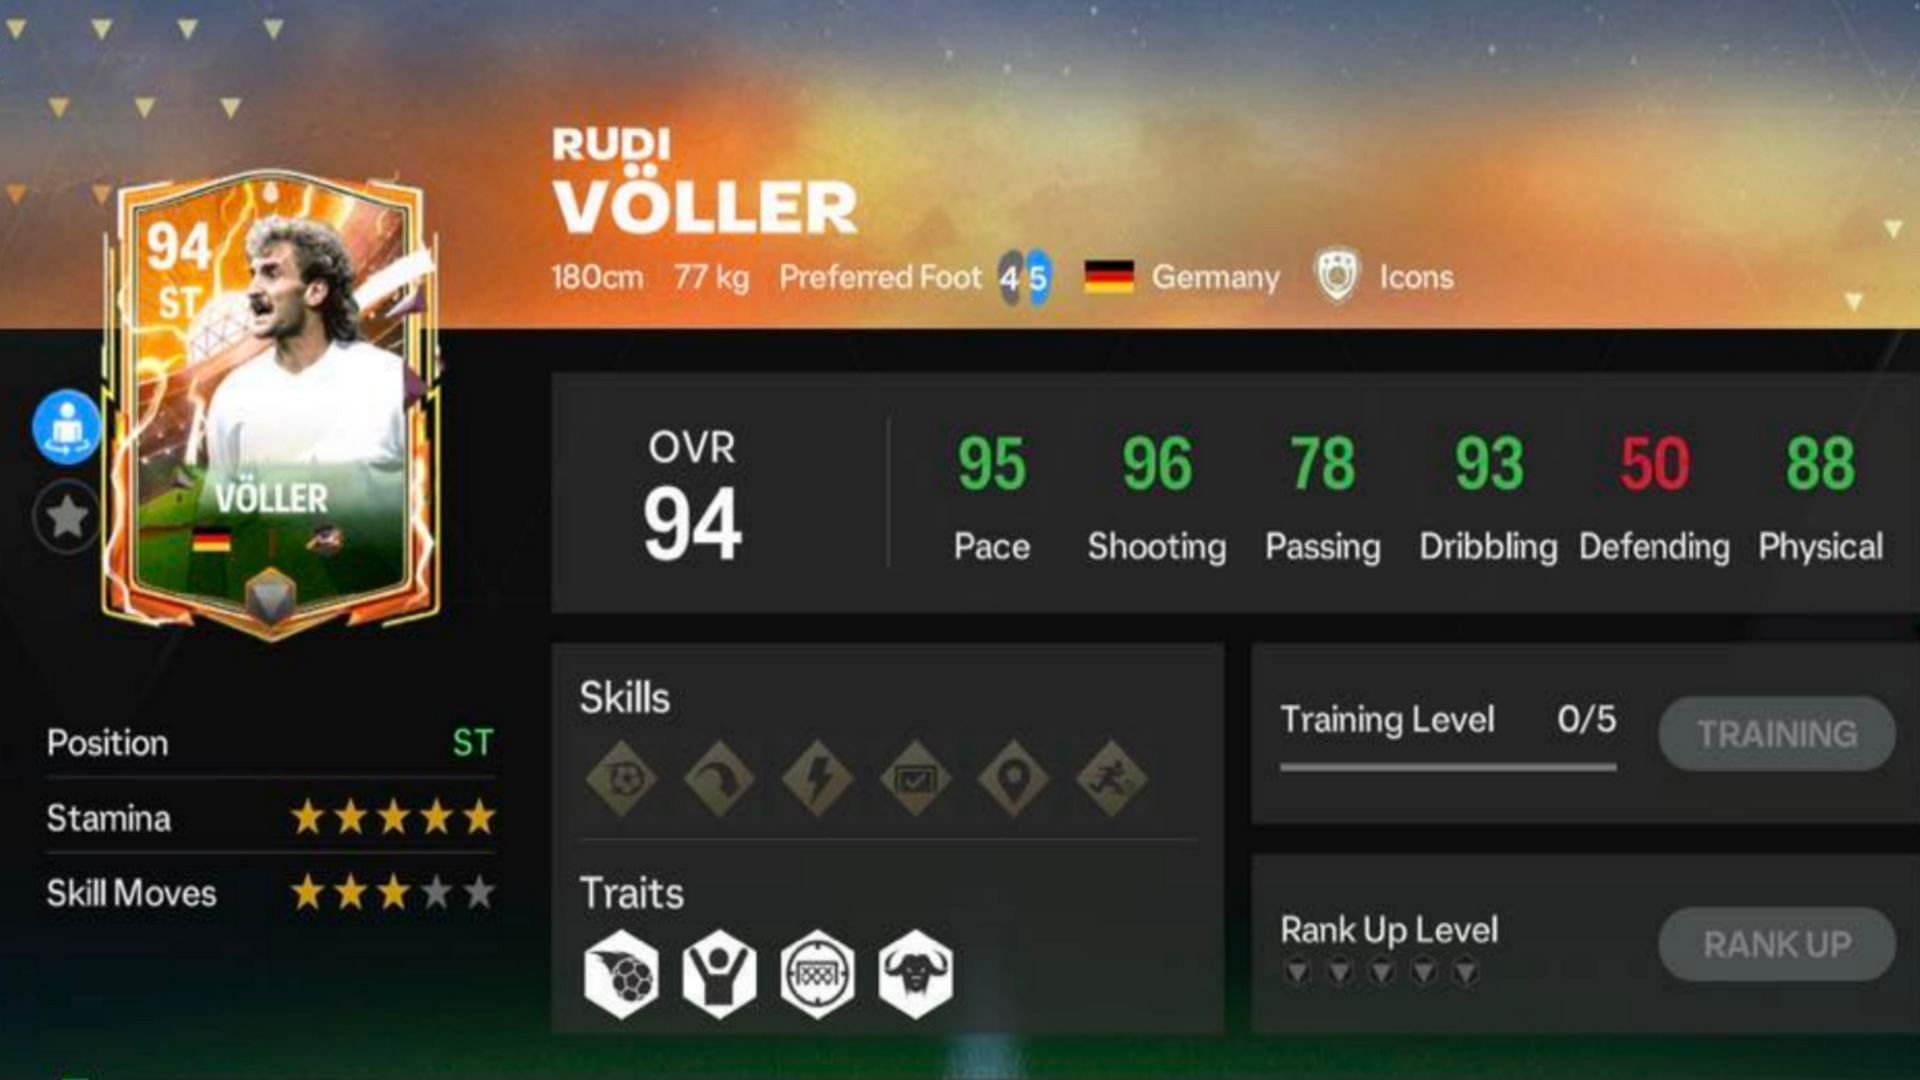 Rudi Voller Heroes 24 card has great stats (Image via EA Sports)